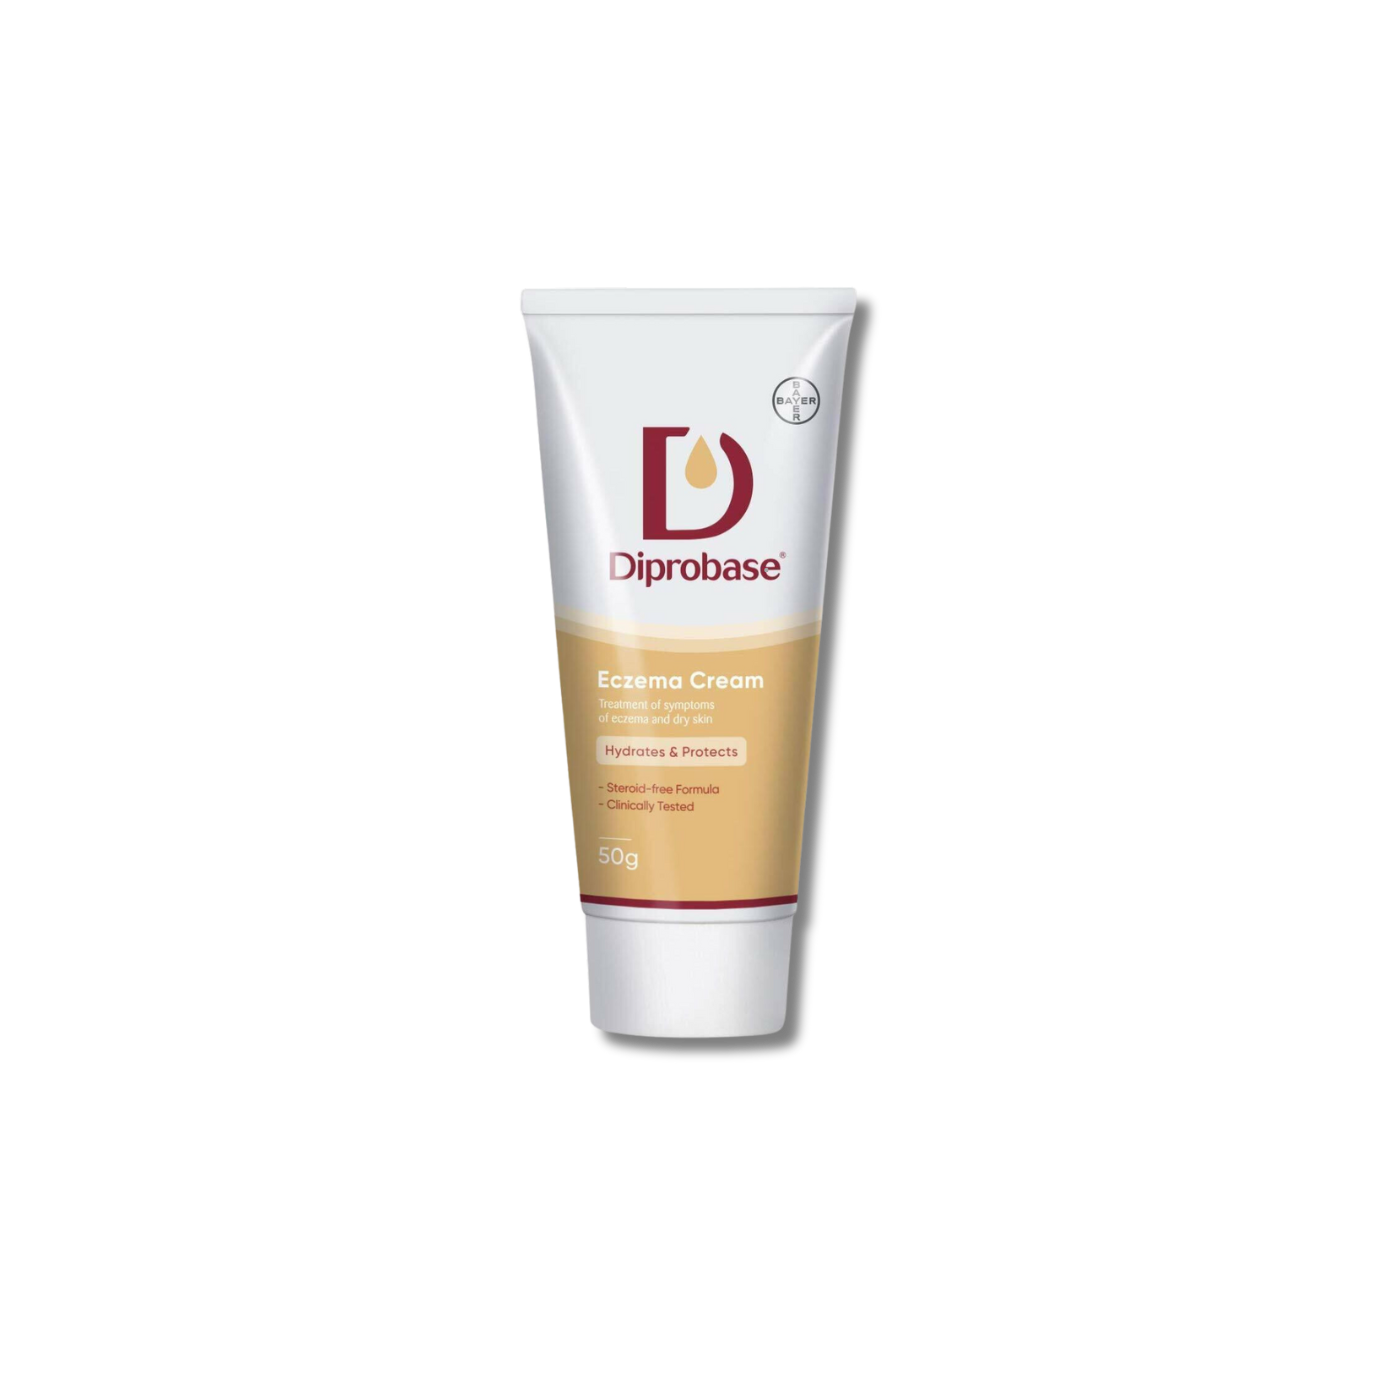 Diprobase Eczema Cream - 50g